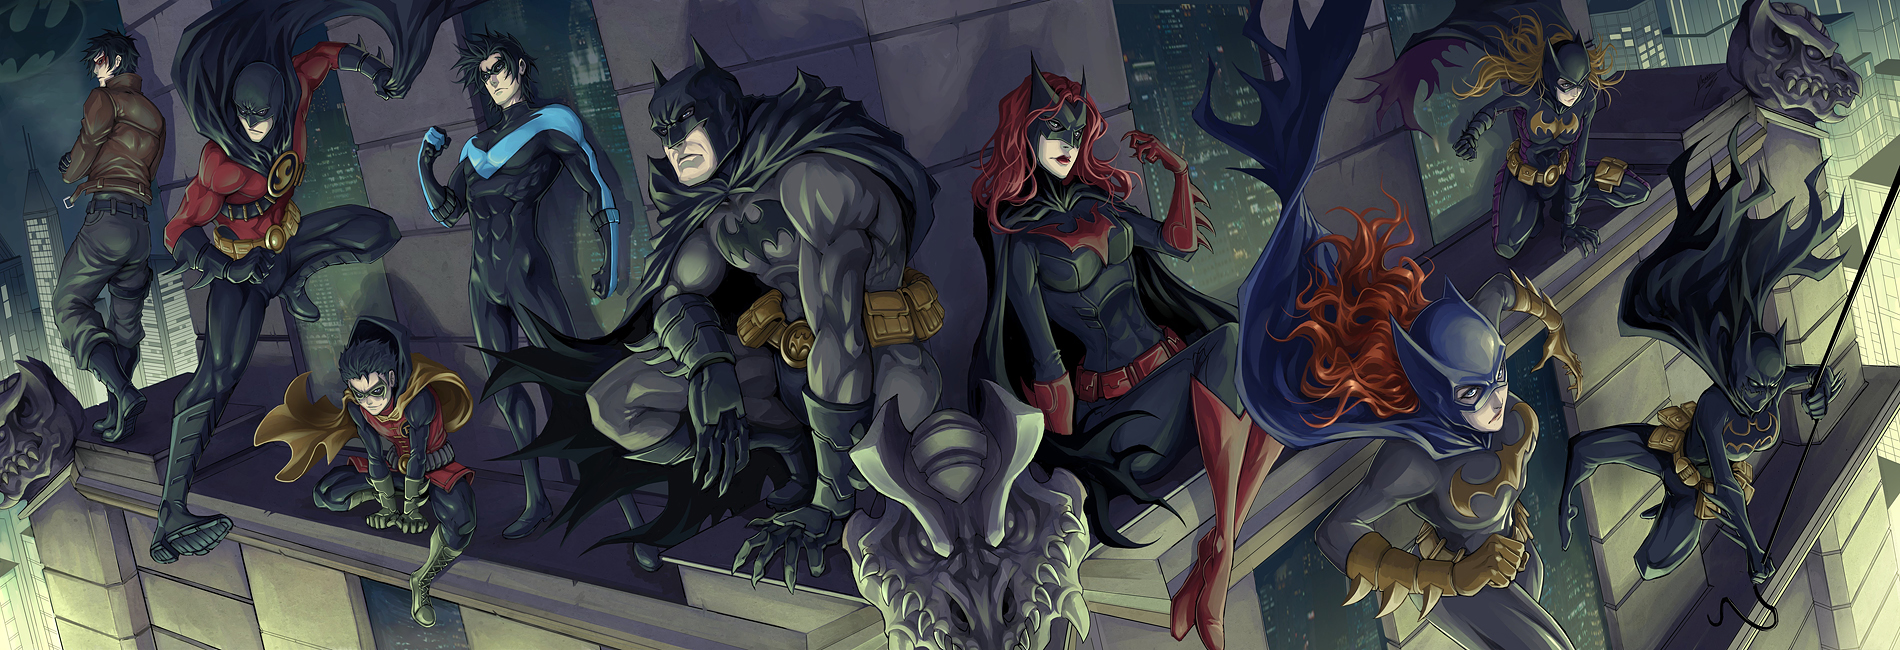 Of Dc S Dark Knights Featuring Batman Batgirl Robin